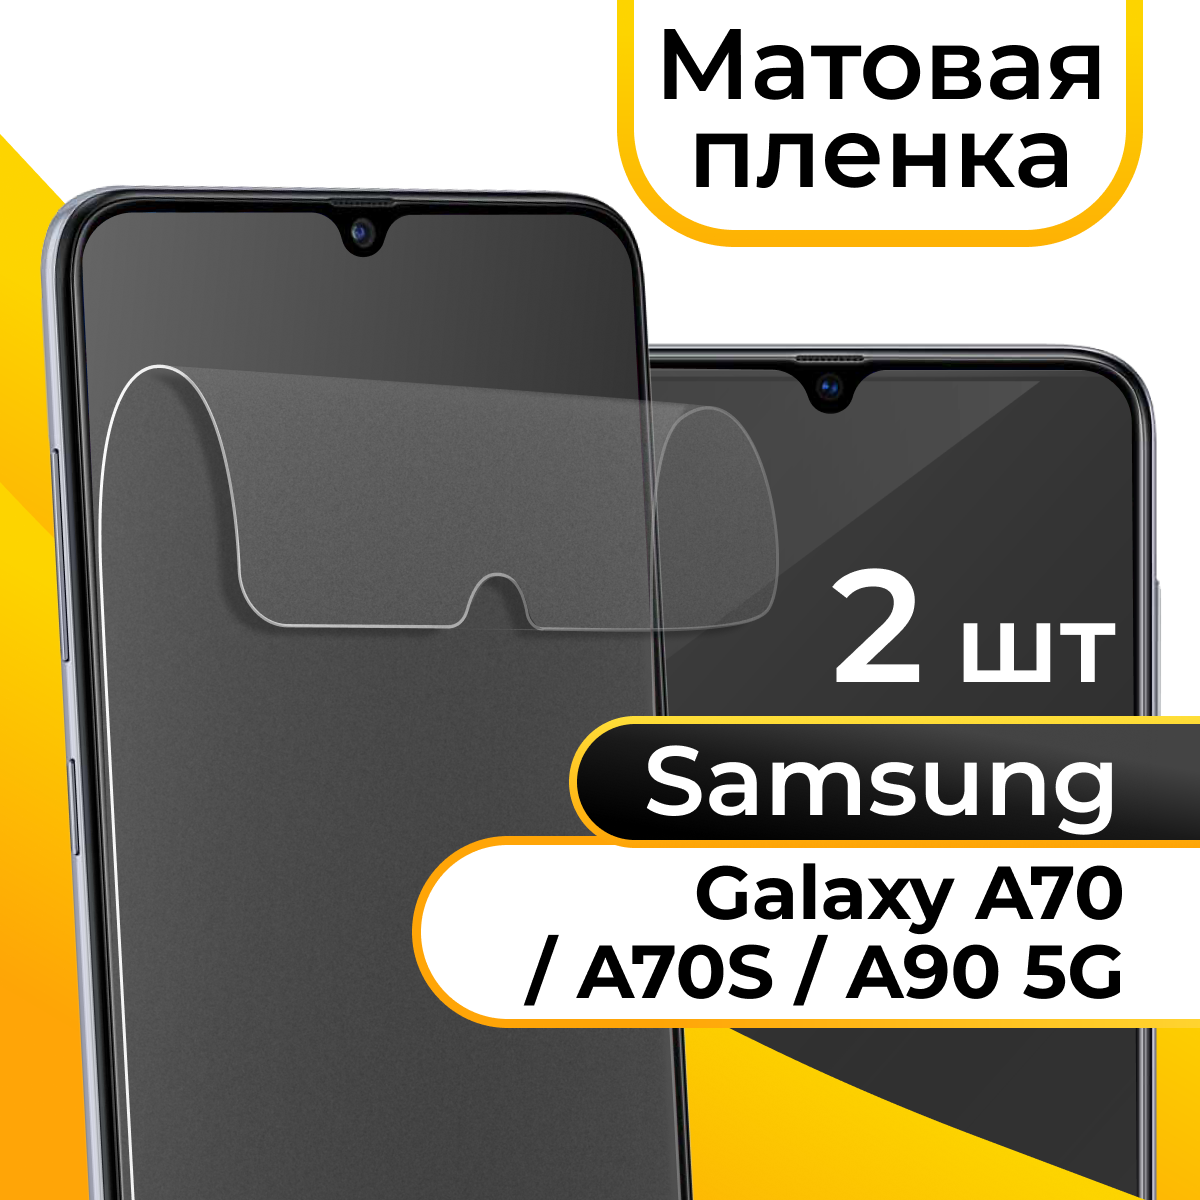 Матовая пленка для смартфона Samsung Galaxy A70 A70S и A90 5G / Защитная пленка на телефон Самсунг Галакси А70 А70С и А90 5Г / Гидрогелевая пленка